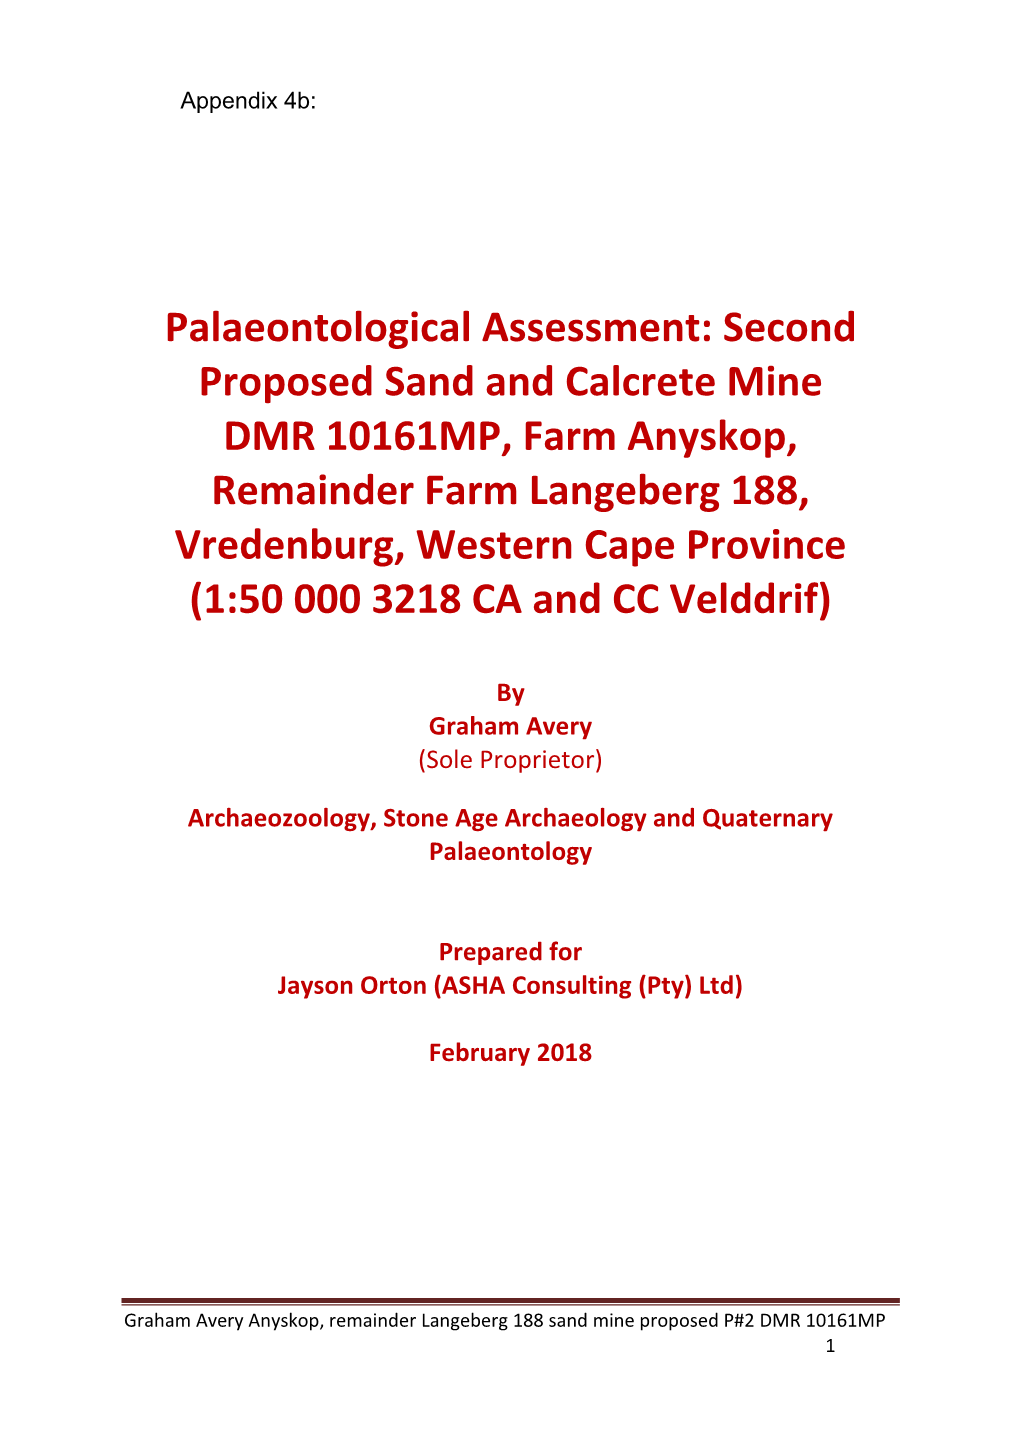 Second Proposed Sand and Calcrete Mine DMR 10161MP, Farm Anyskop, Remainder Farm Langeberg 188, Vredenburg, Western Cape Province (1:50 000 3218 CA and CC Velddrif)